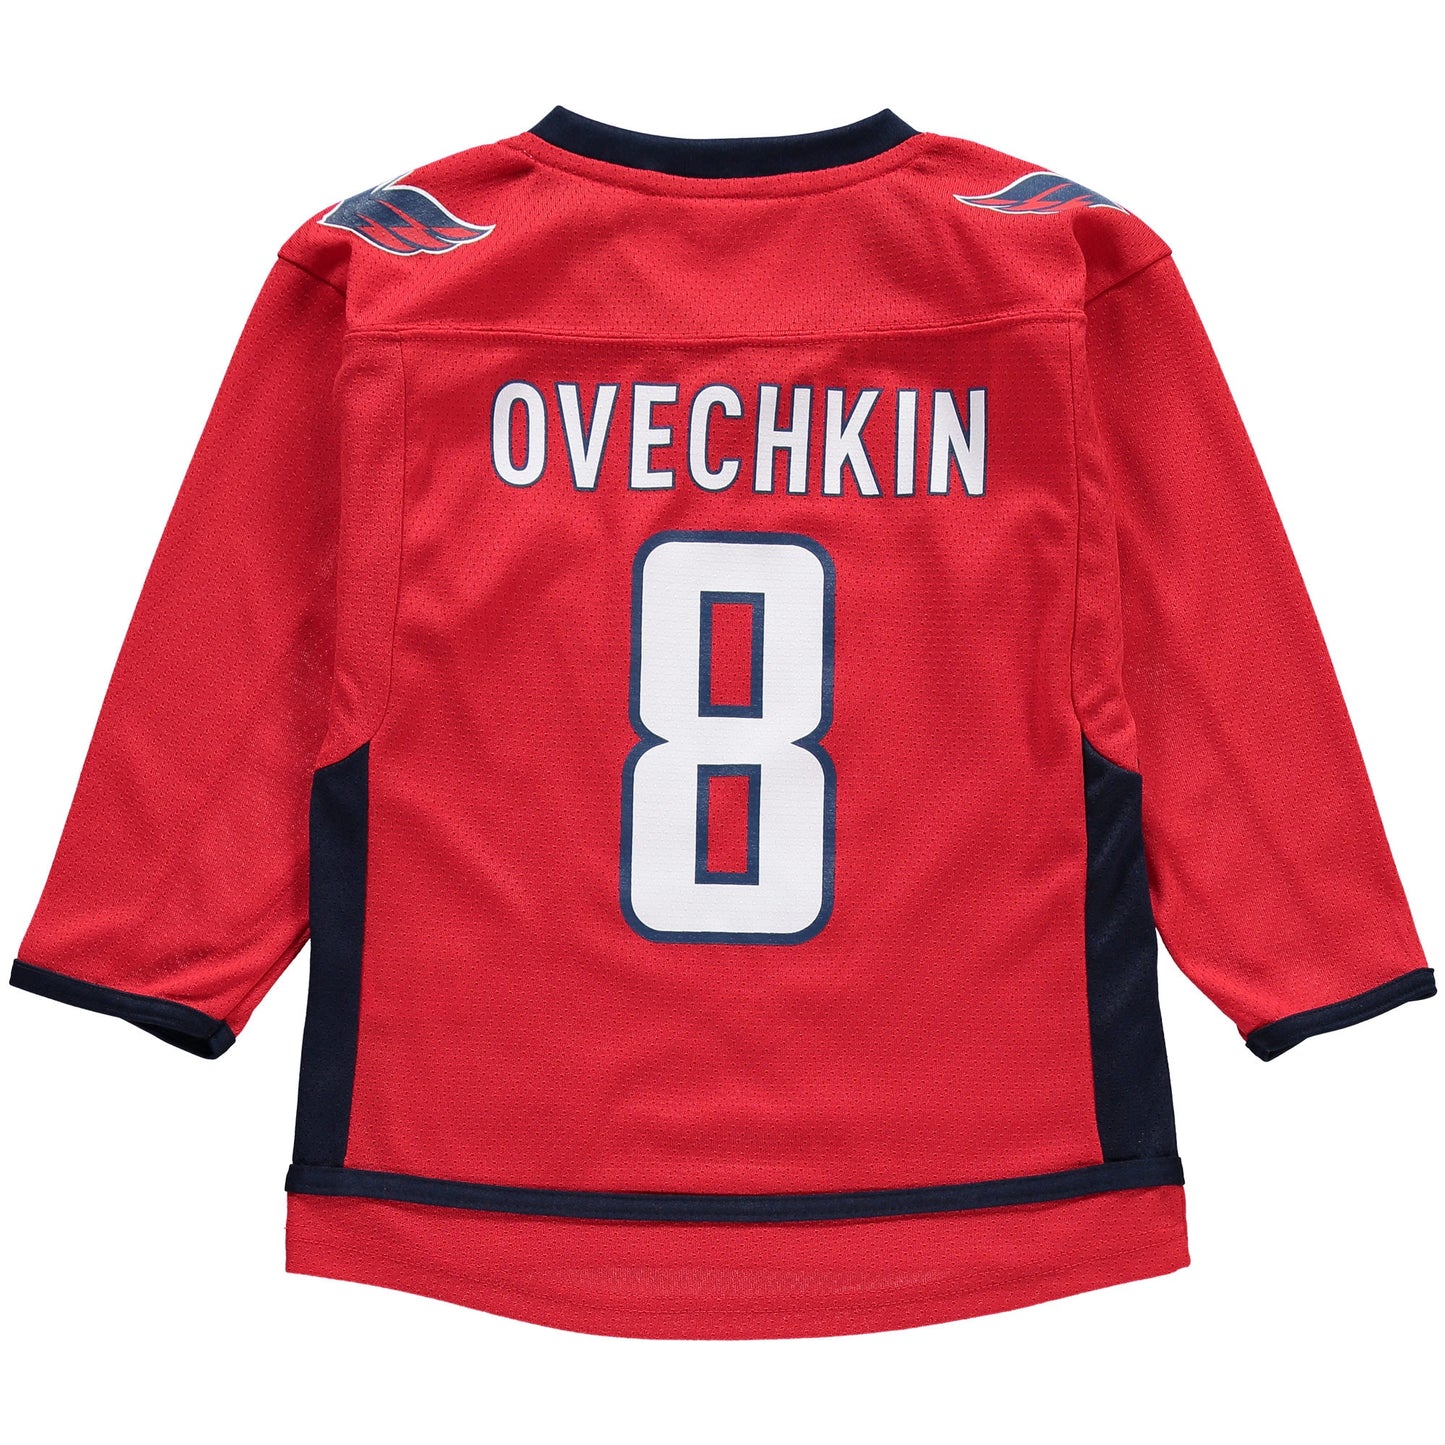 Alexander Ovechkin Washington Capitals Preschool Replica Player Jersey - Red